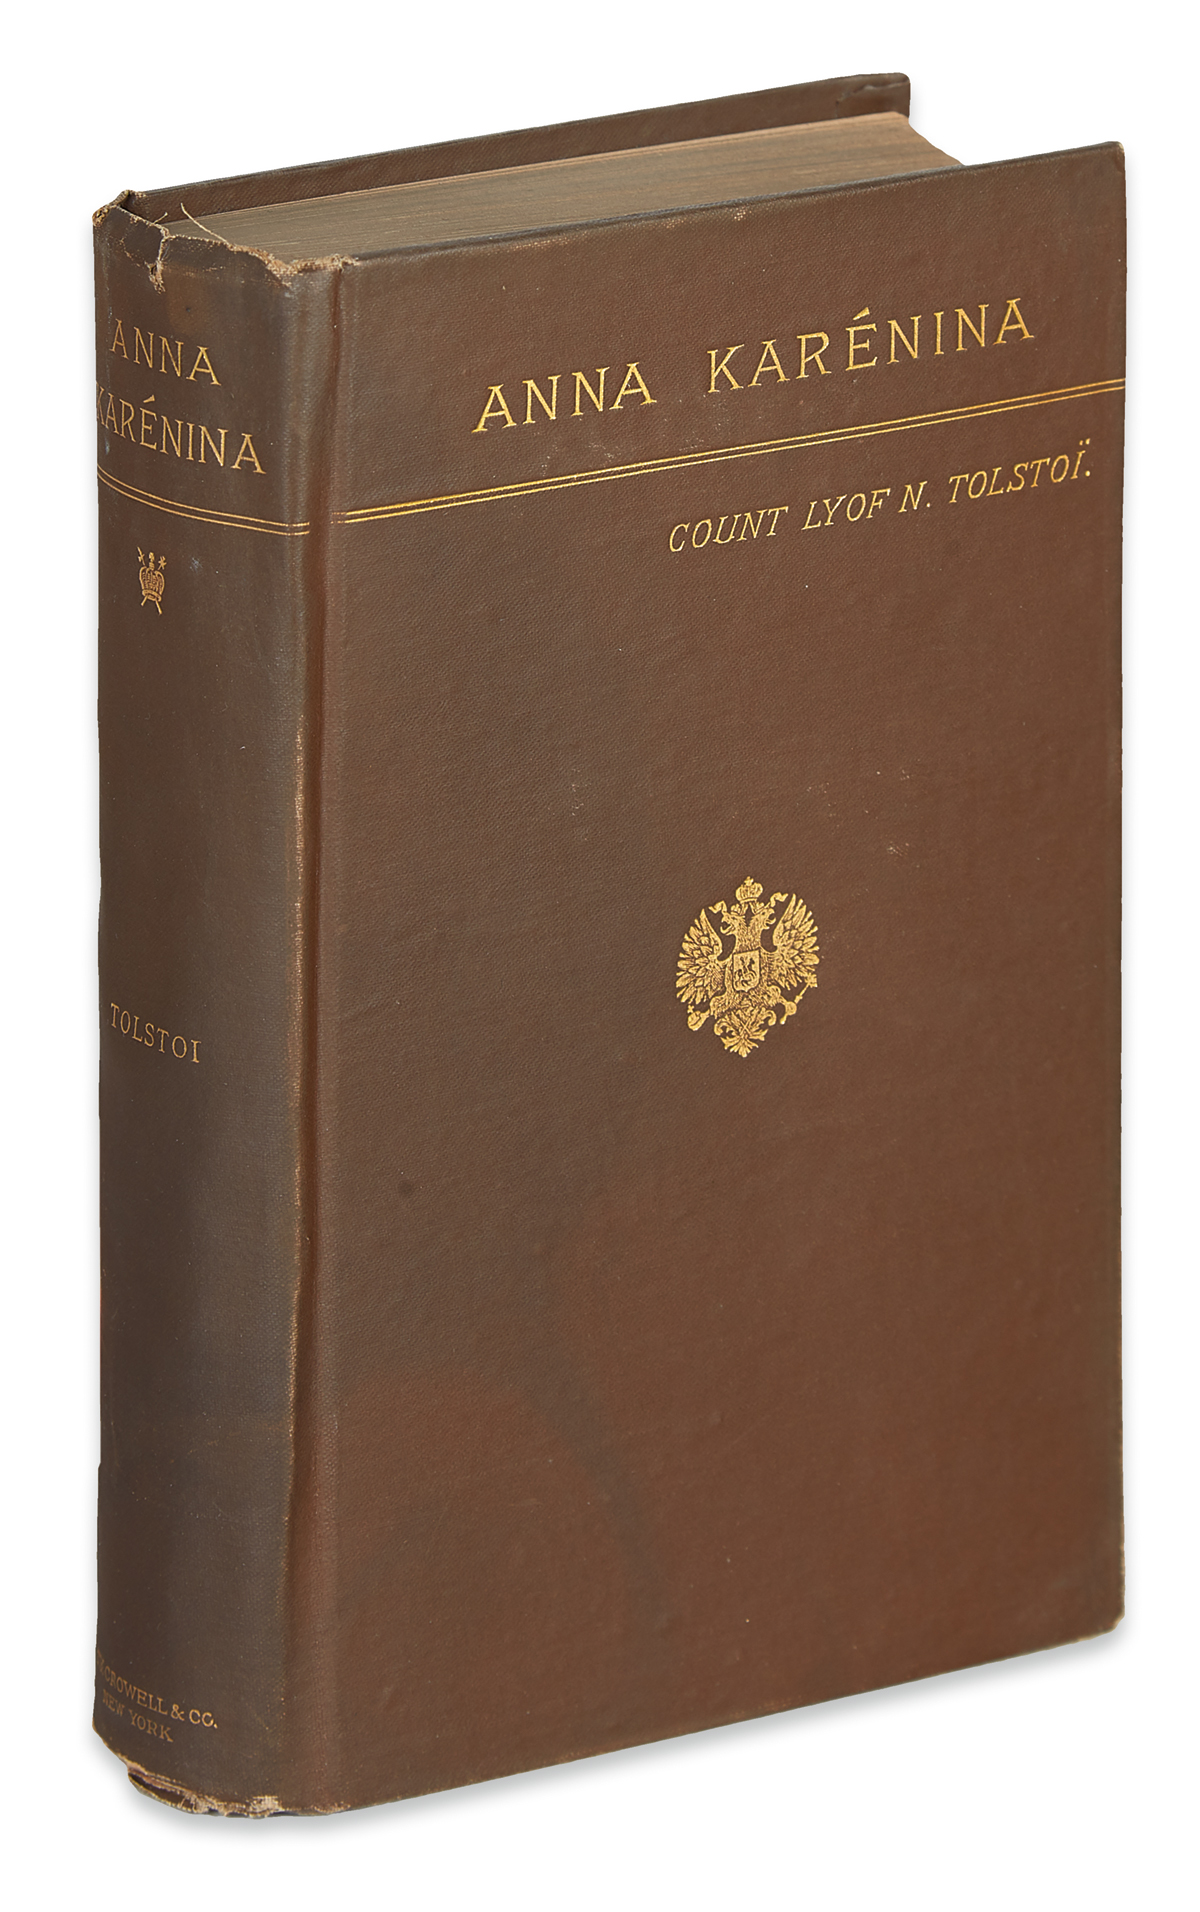 [TOLSTOY, LEO.] Count Lyof N. Tolstoï. Anna Karénina.